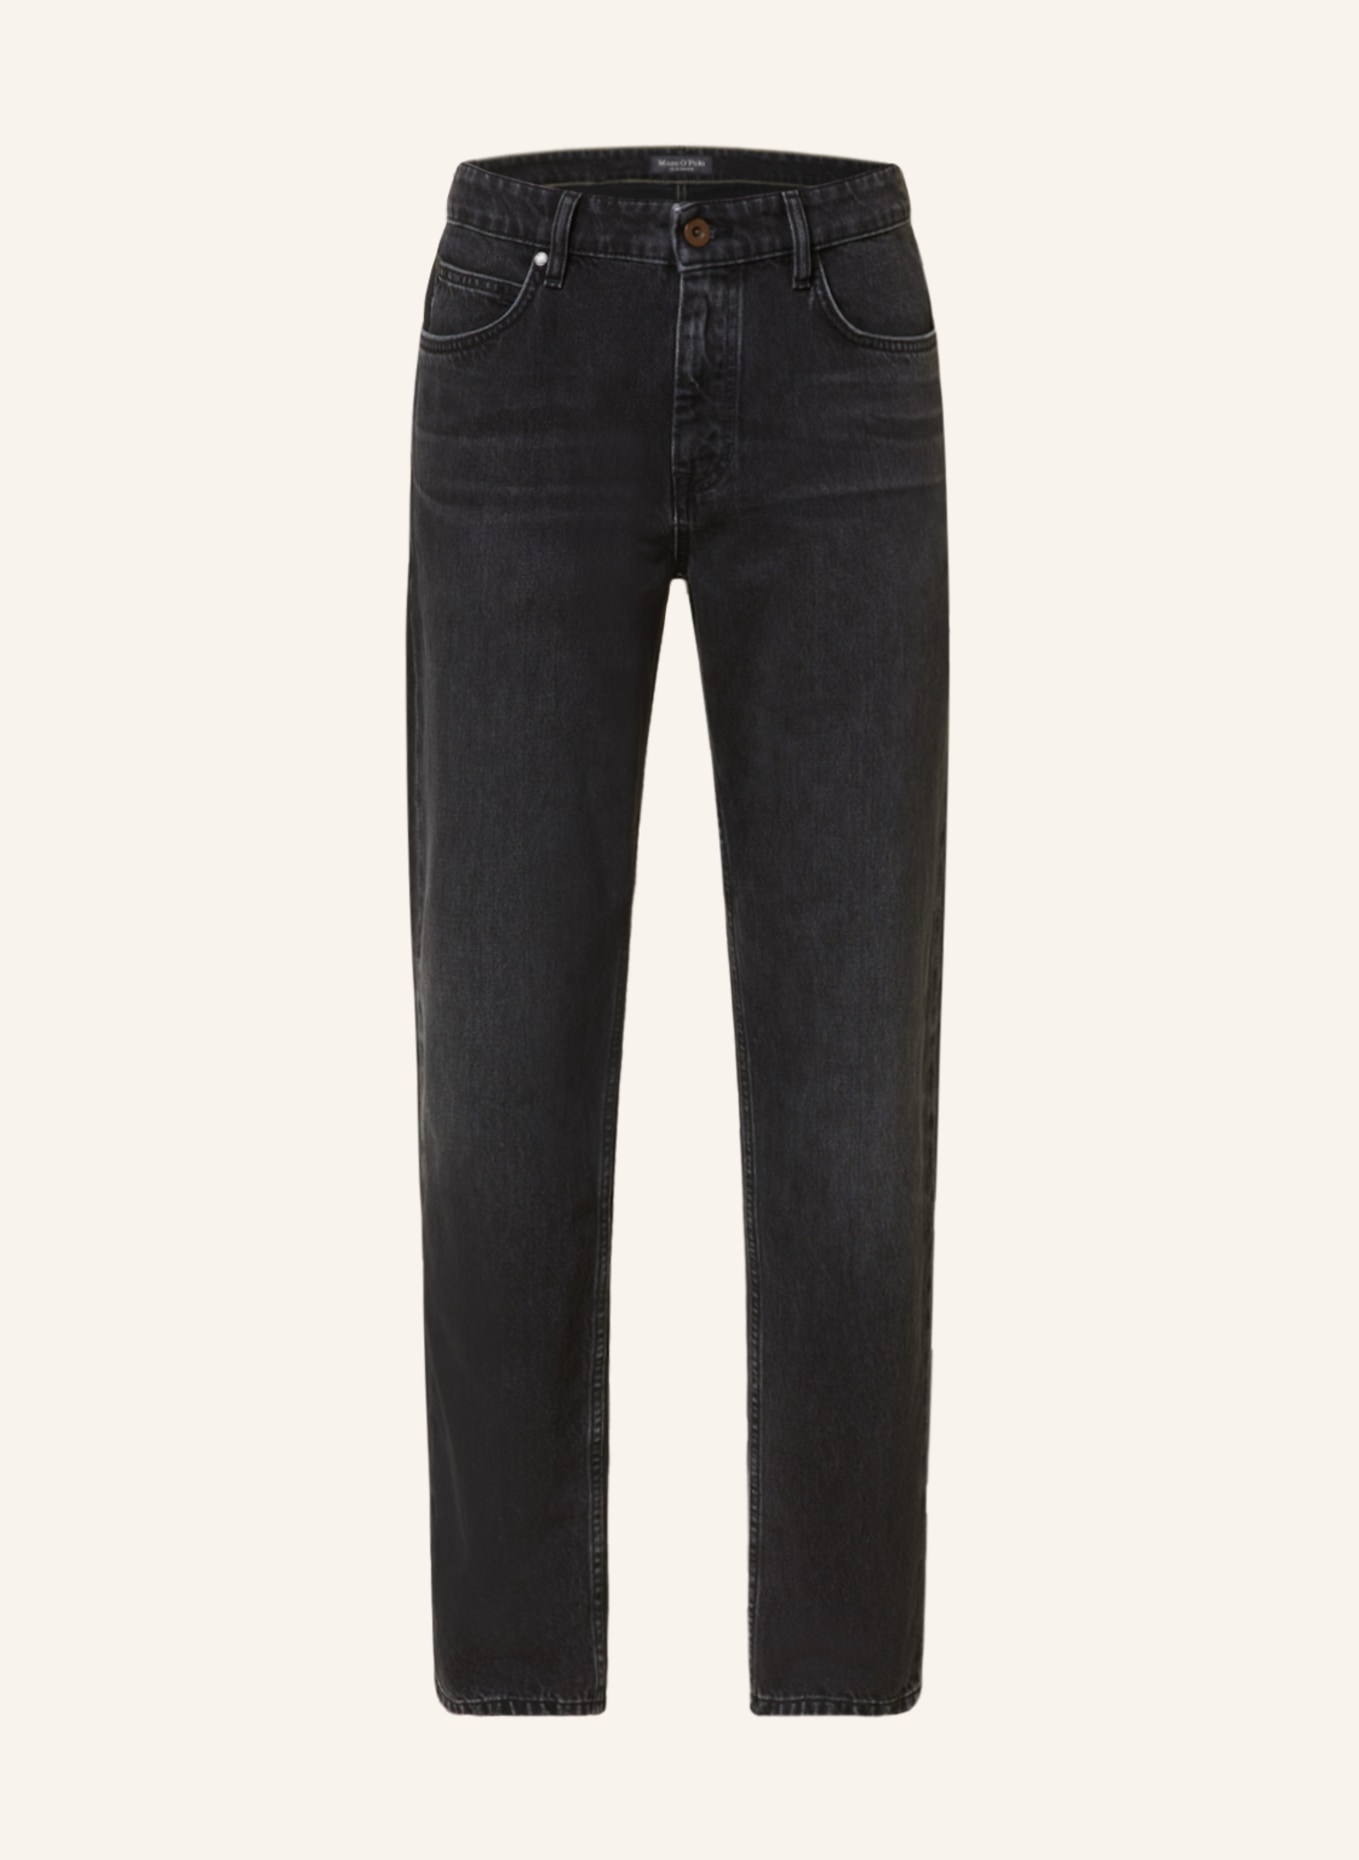 Marc O'Polo Jeans Tapered Fit, Farbe: 030 Black od black wash (Bild 1)